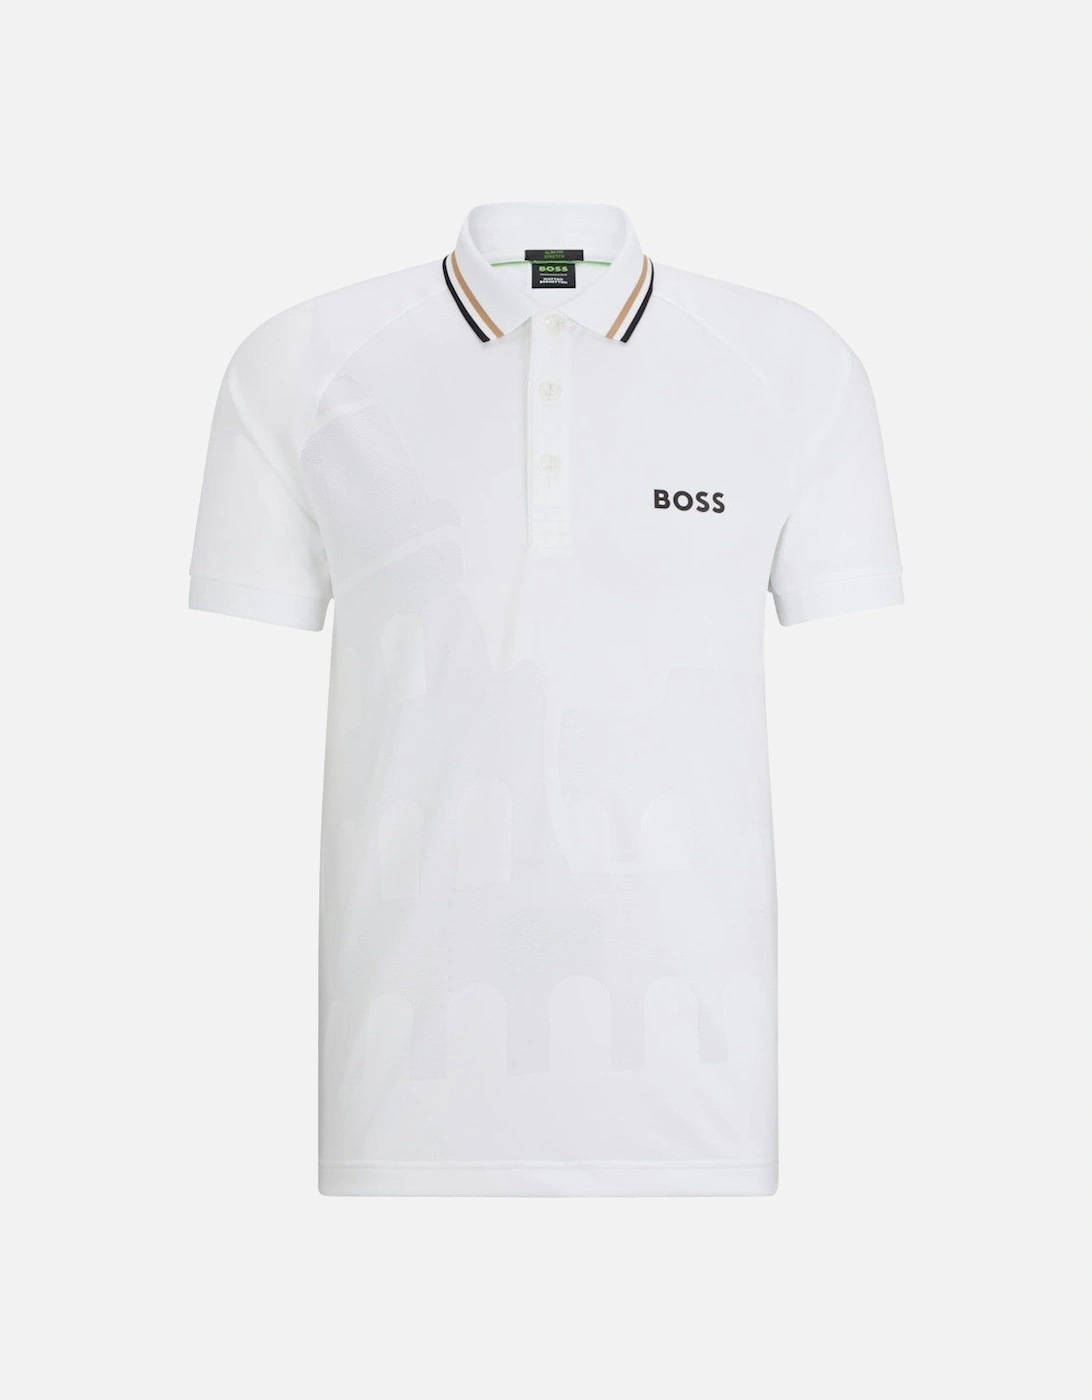 BOSS Green Patteo MB Polo Shirt 10259763 100 White, 5 of 4